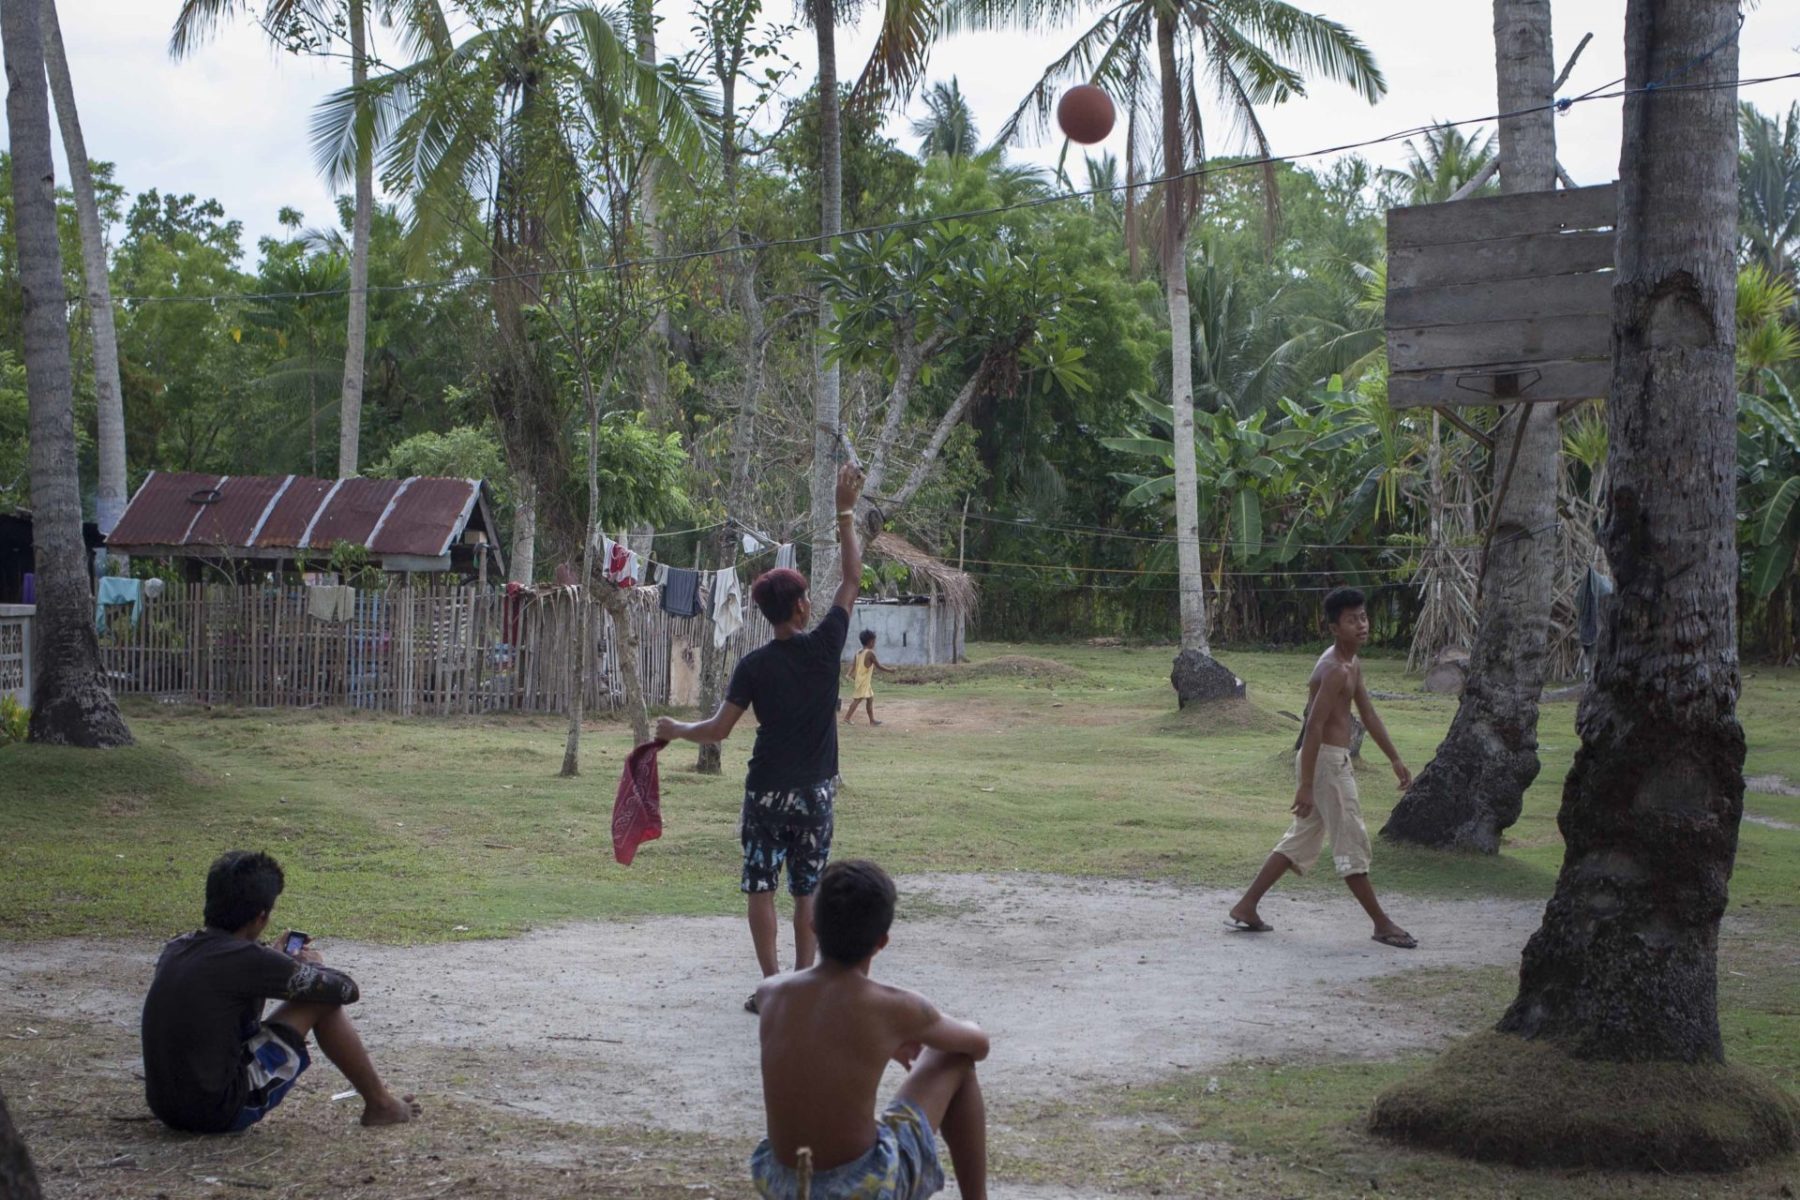 Philippinen.Mindanao.Jugendliche.Basketball